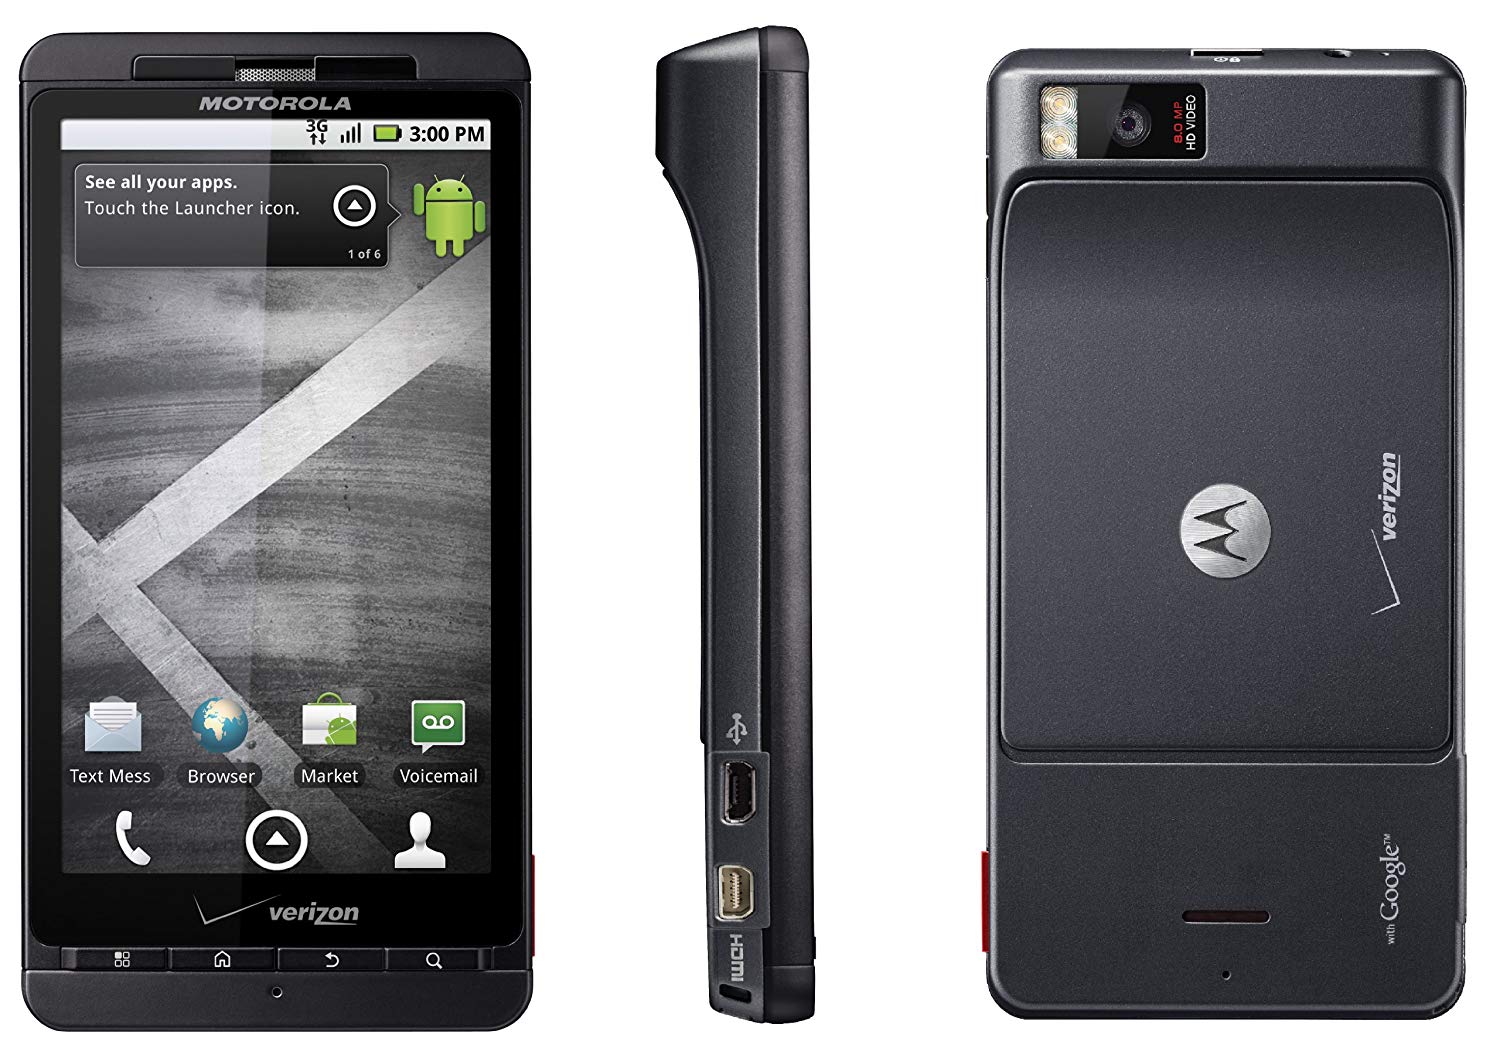 Verizon Motorola Droid X WiFi 3G Camera Android Smartphone Cell Phone